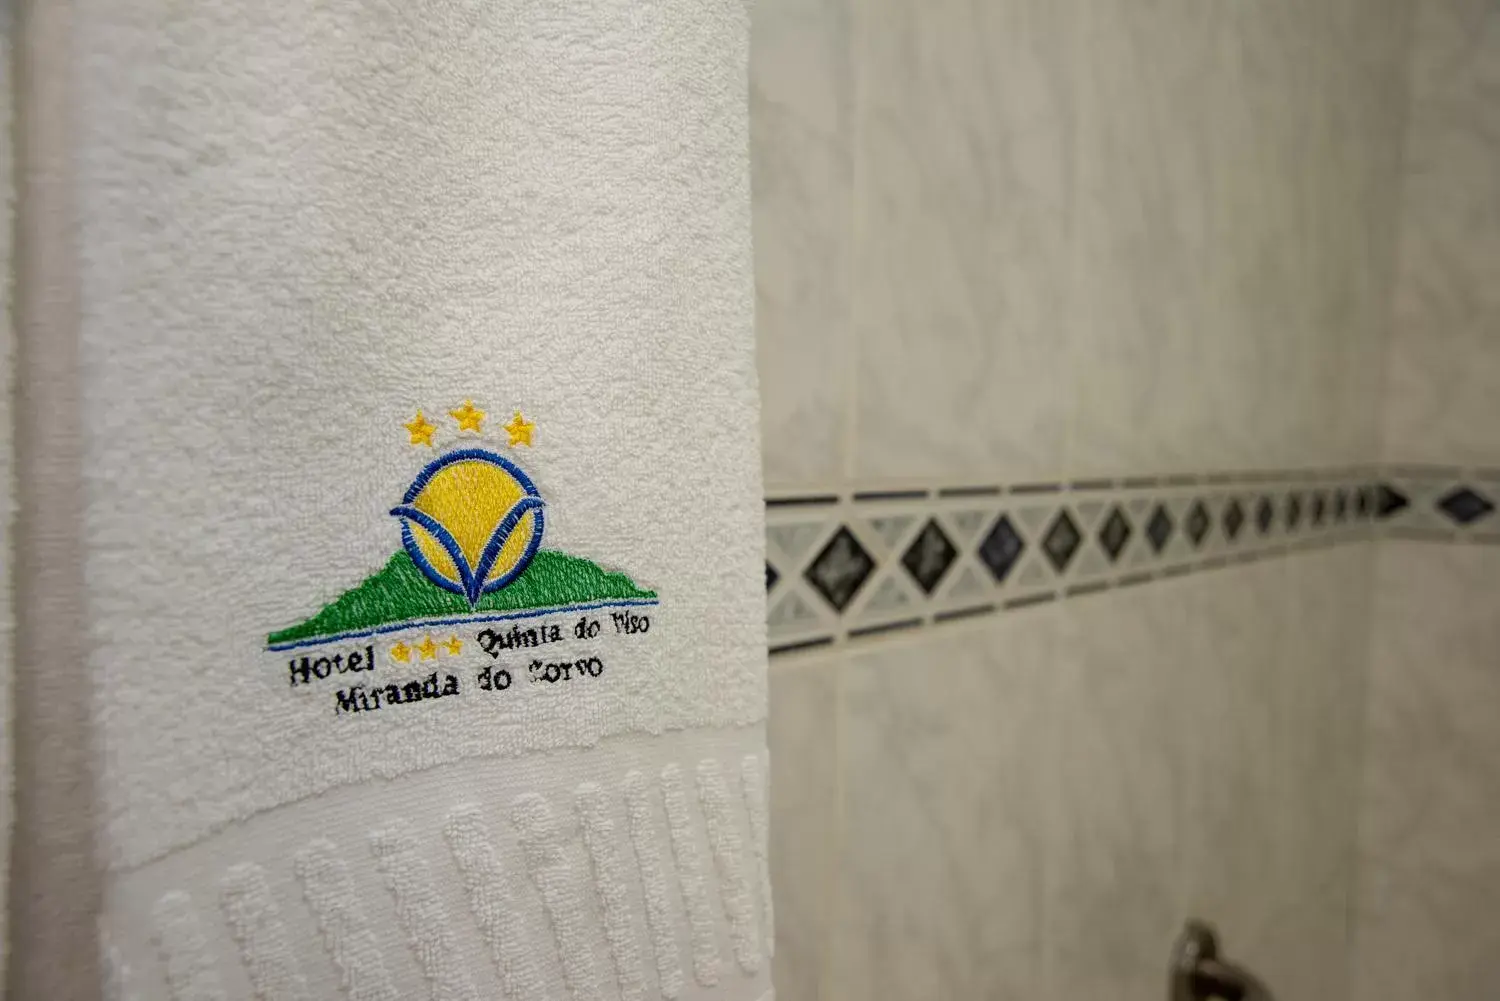 Property logo or sign in Hotel Quinta do Viso